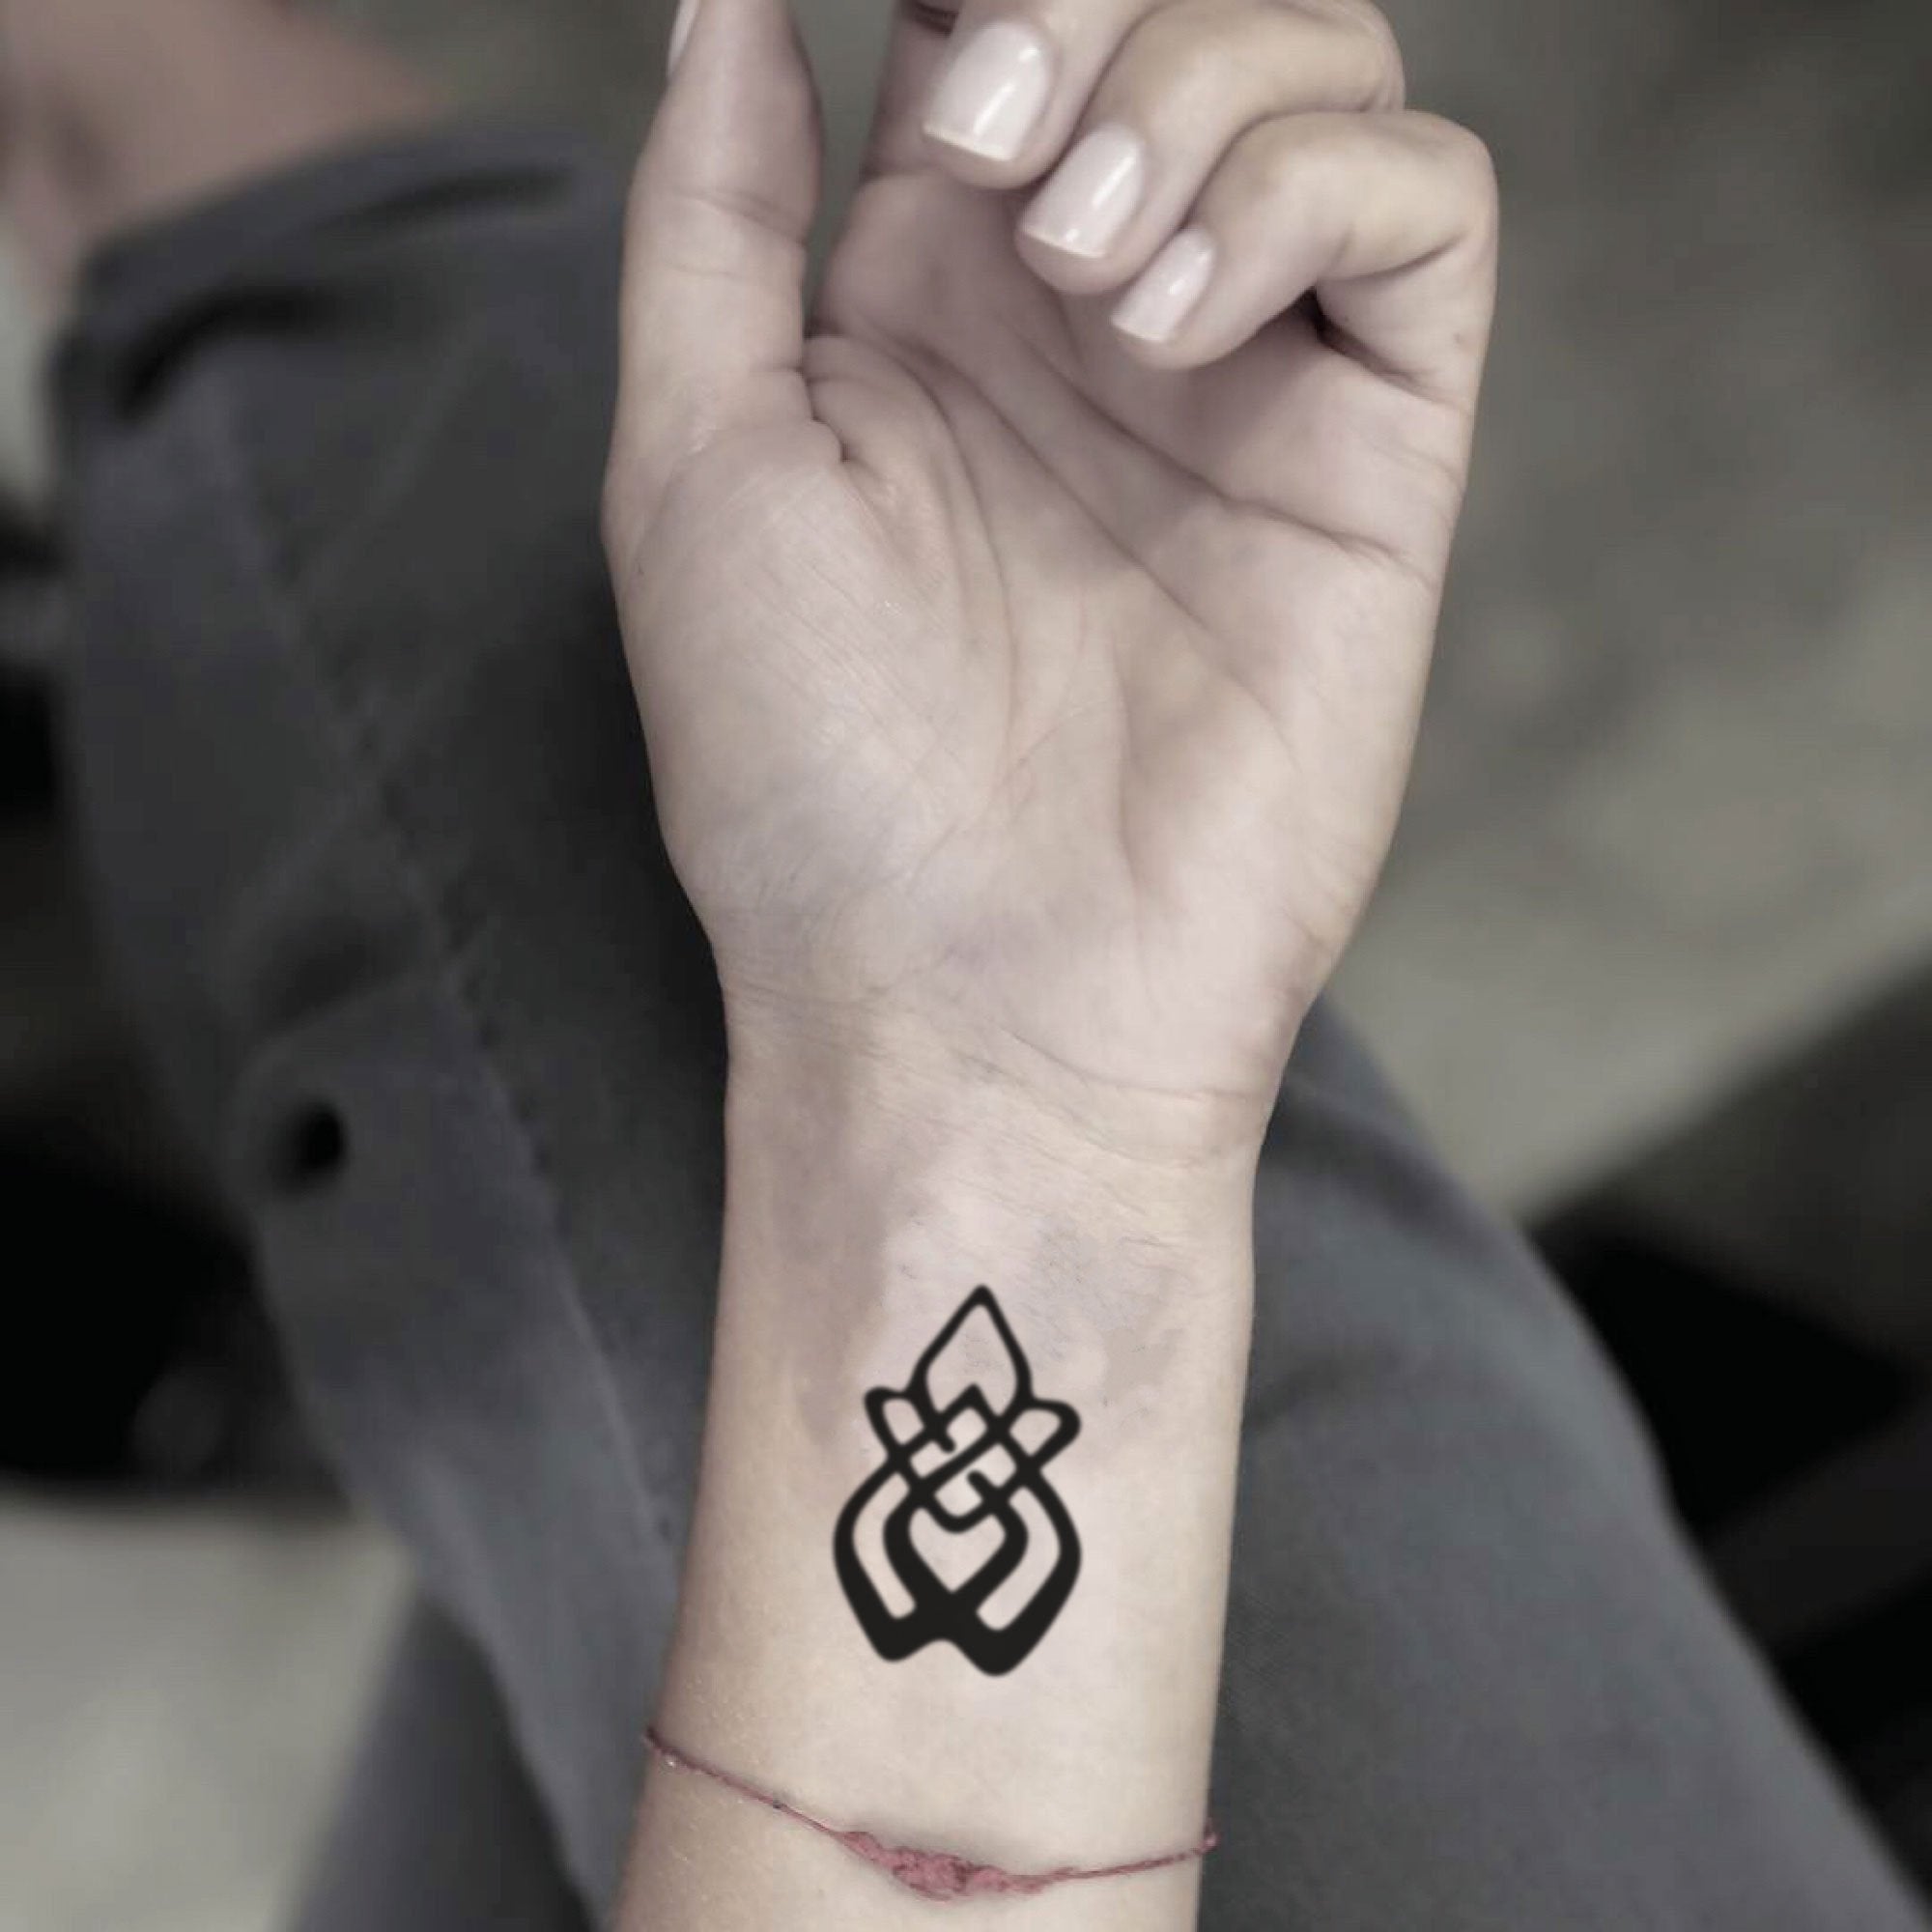 10 Worth-It tattoos for burn victims | fashionmommy's Blog